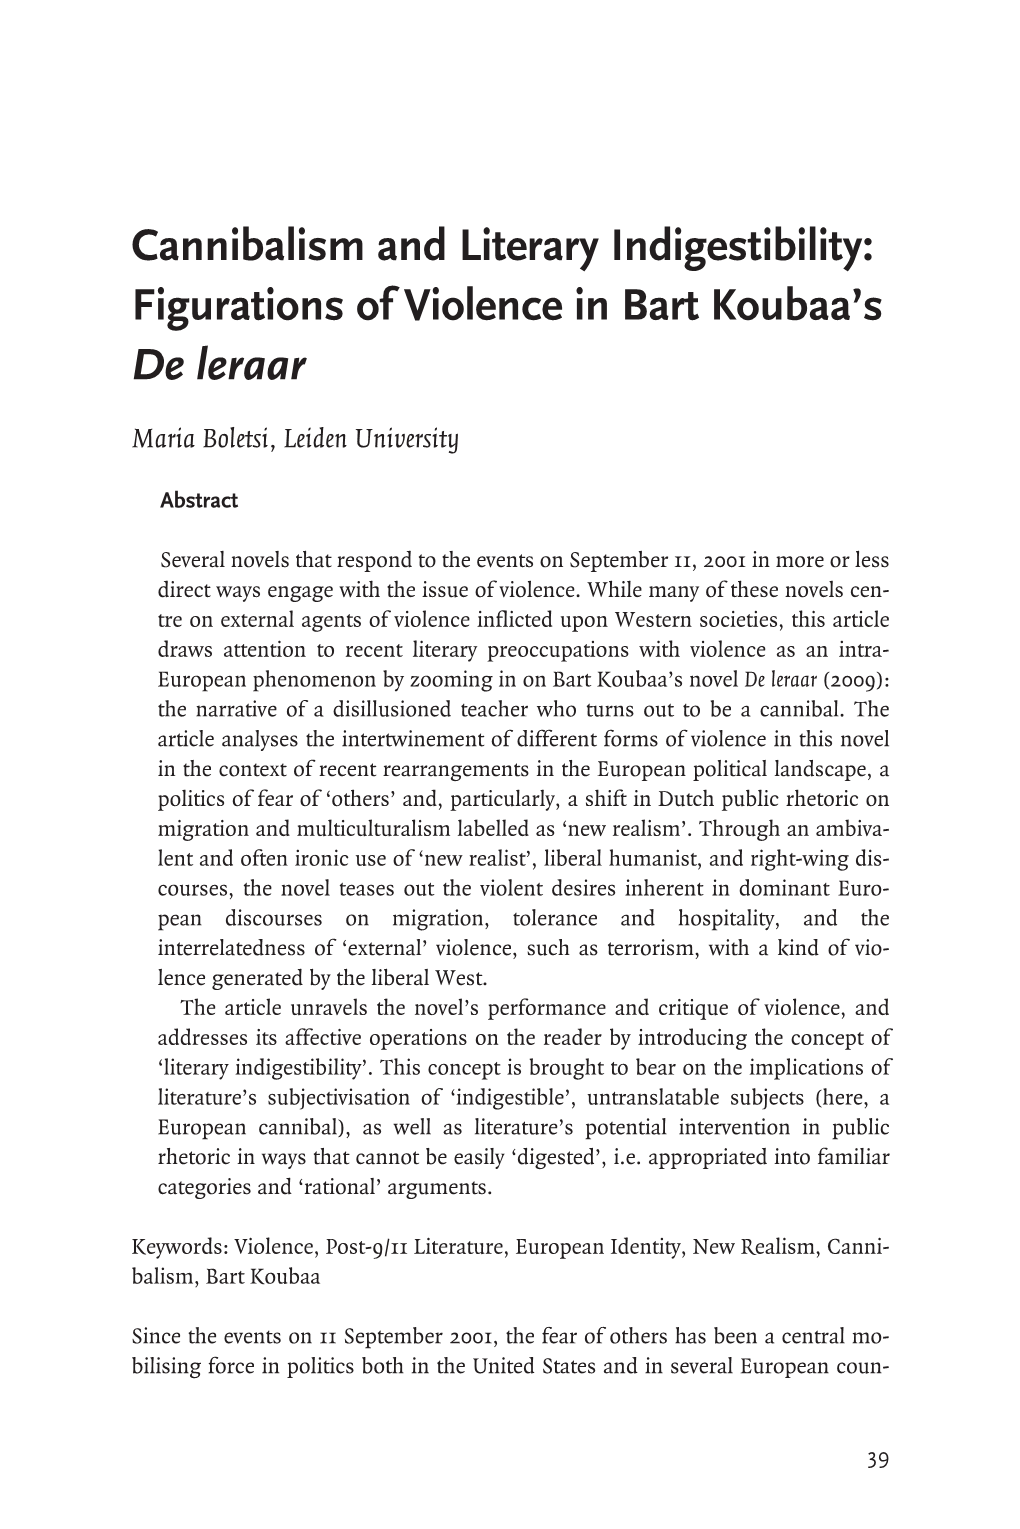 Cannibalism and Literary Indigestibility: Figurations of Violence in Bart Koubaa’S De Leraar